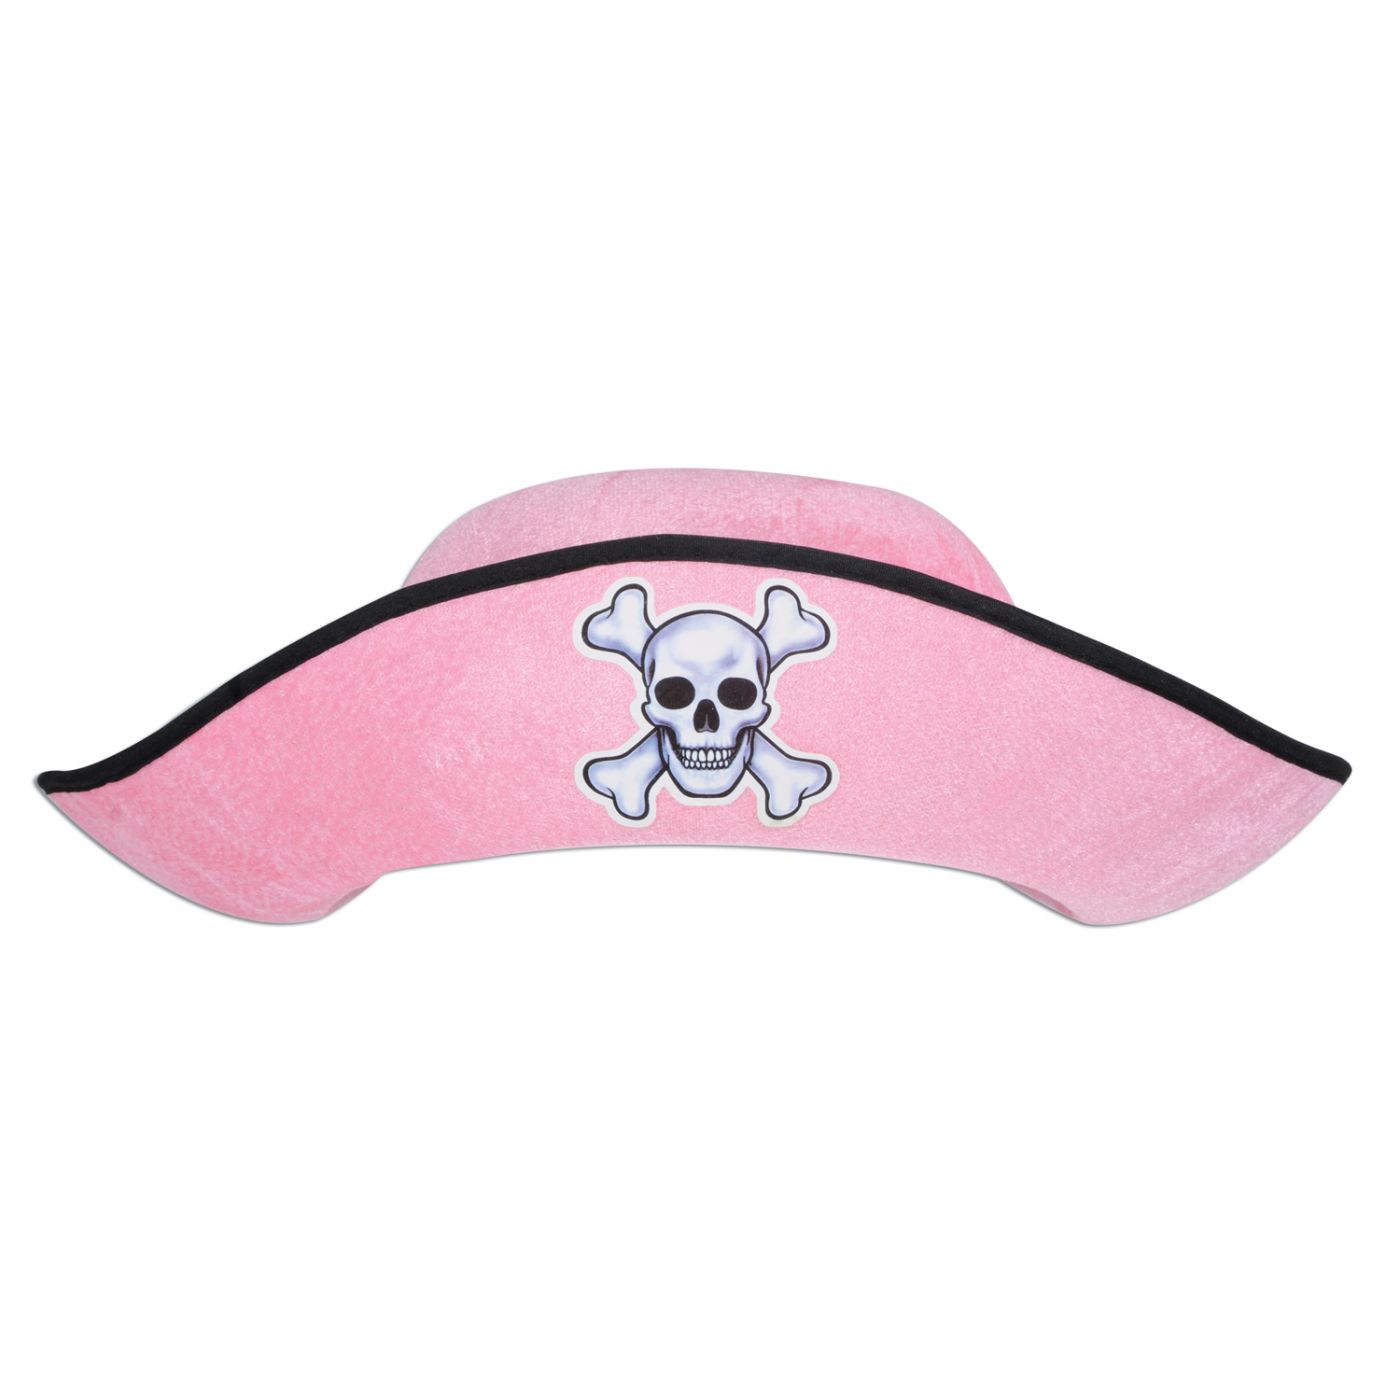 Image of Adult Pink Felt Pirate Hat (12)